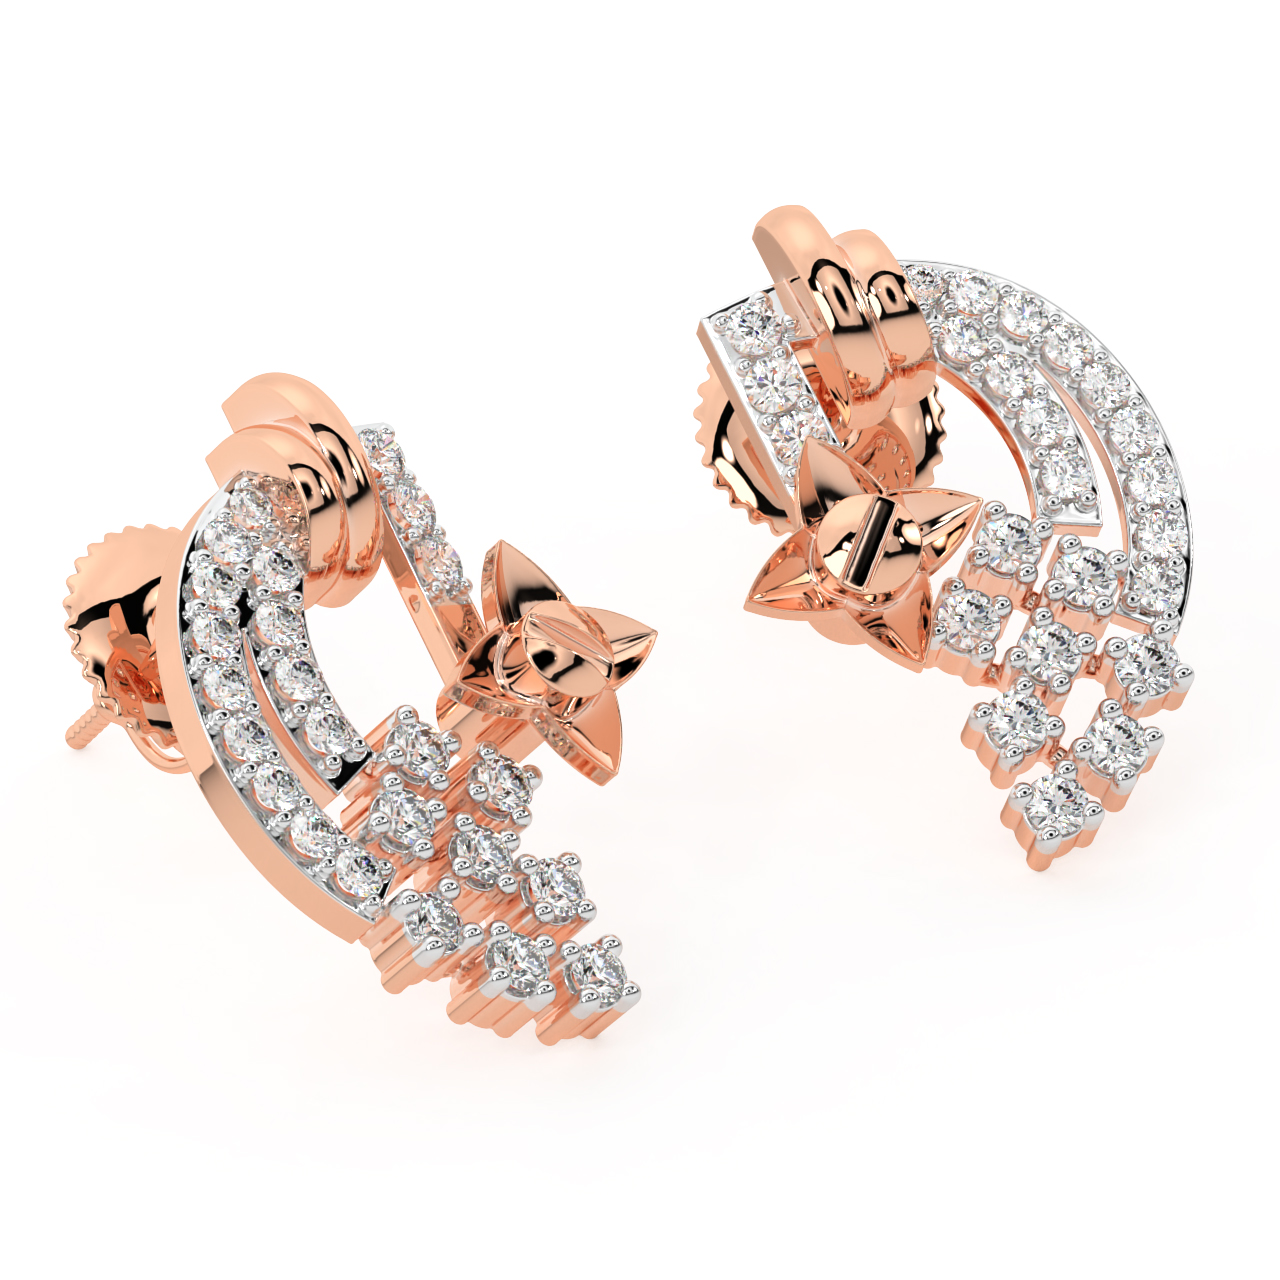 Gold Star Diamond Stud Earrings